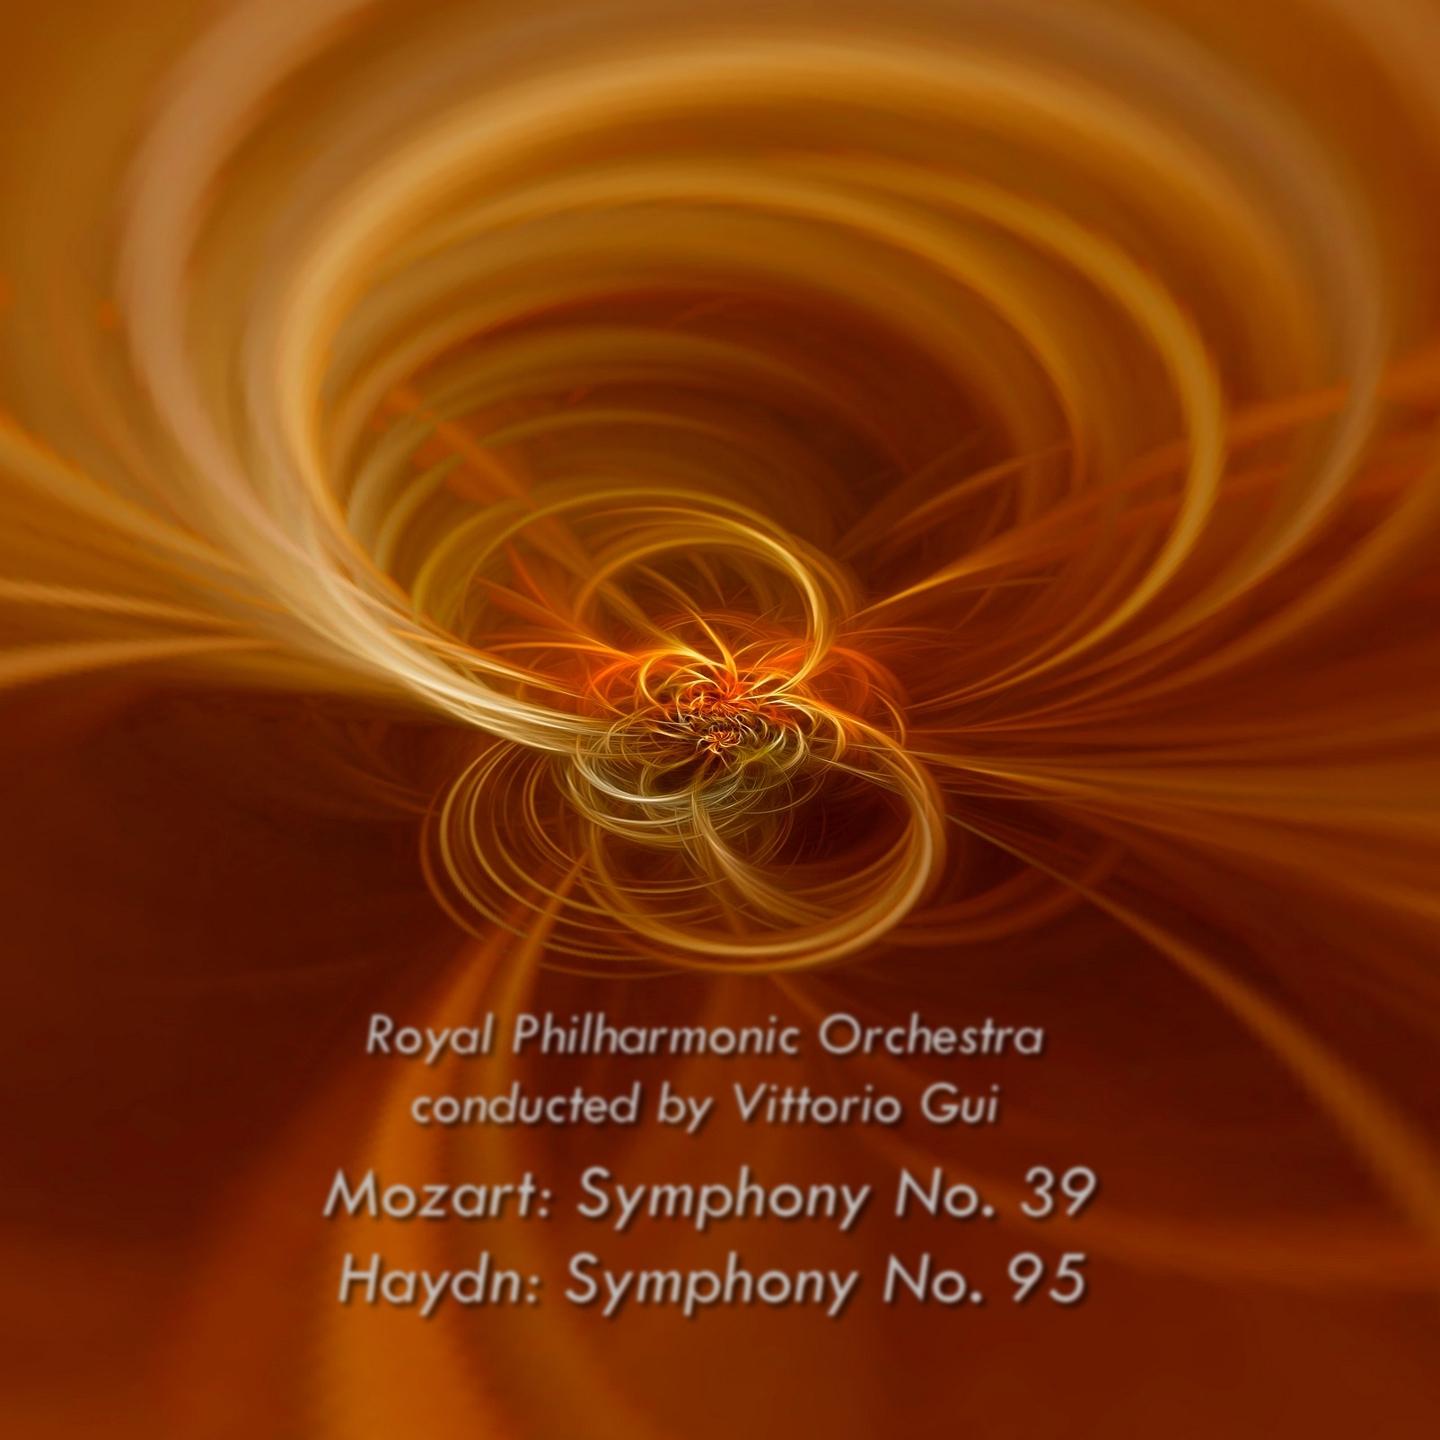 Symphony No 39 in E-Flat Major, Op. 1st mvt. - Adagio - Allegro